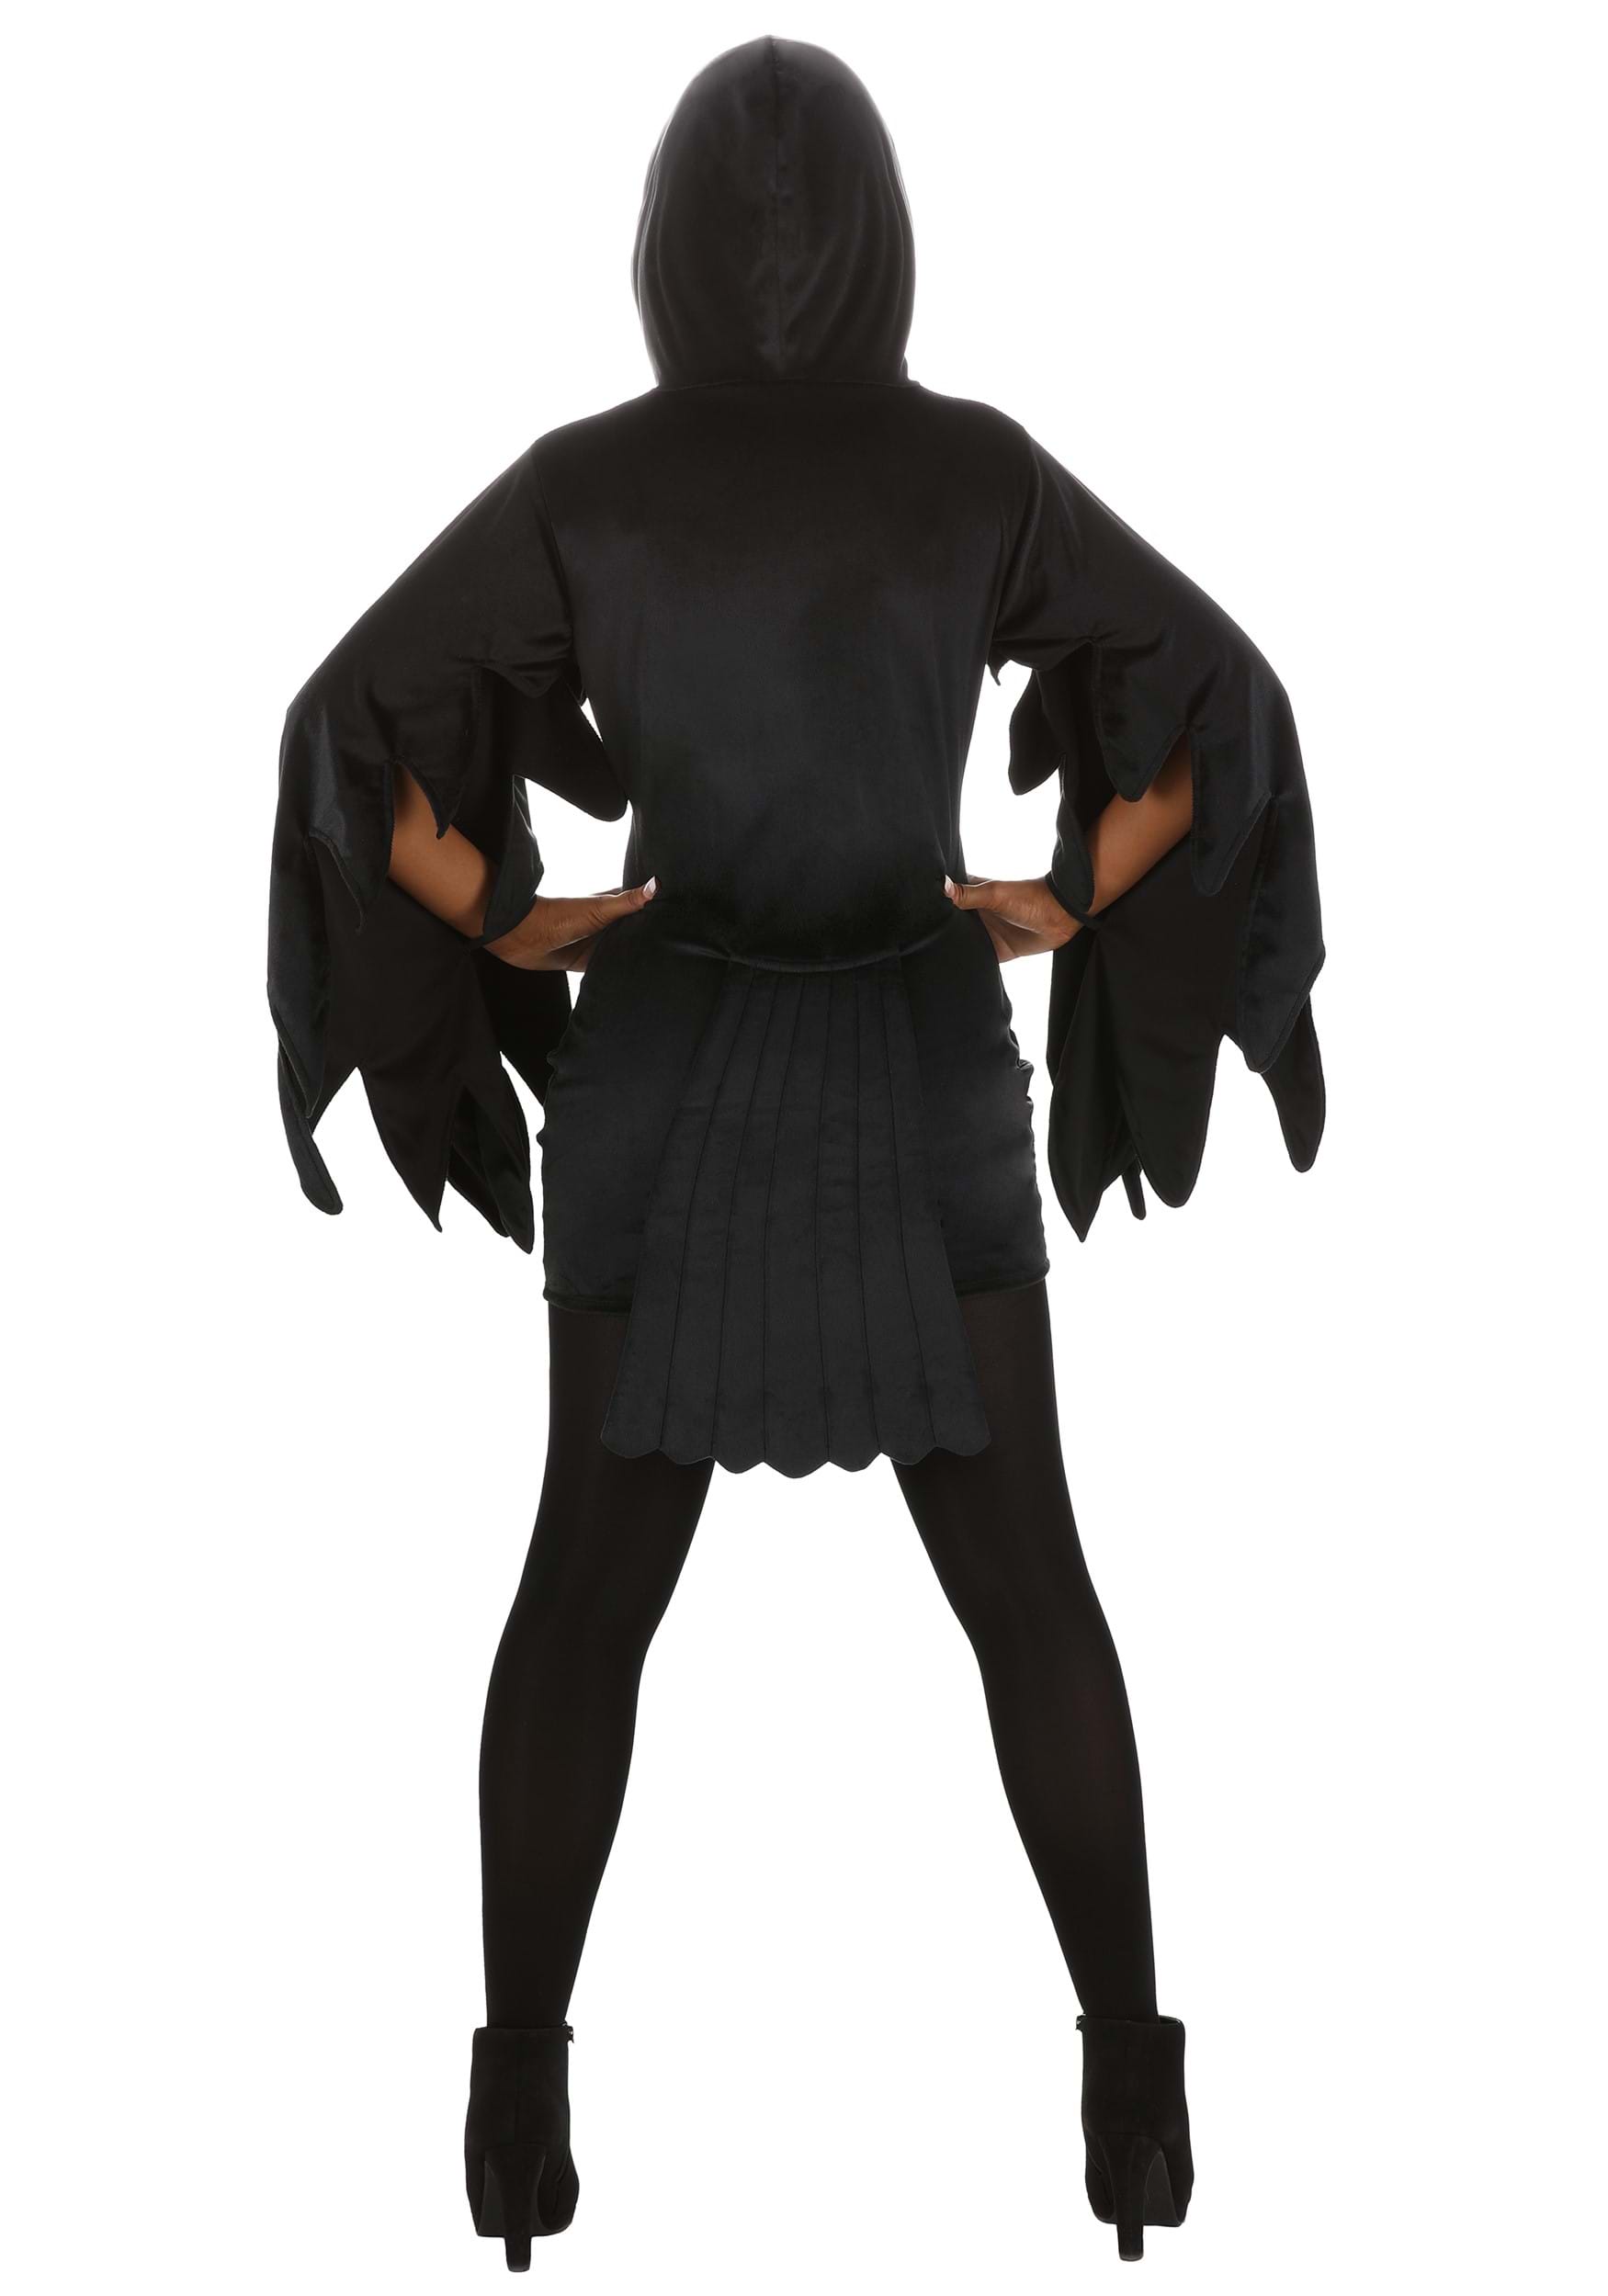 Adult Classy Crow Costume